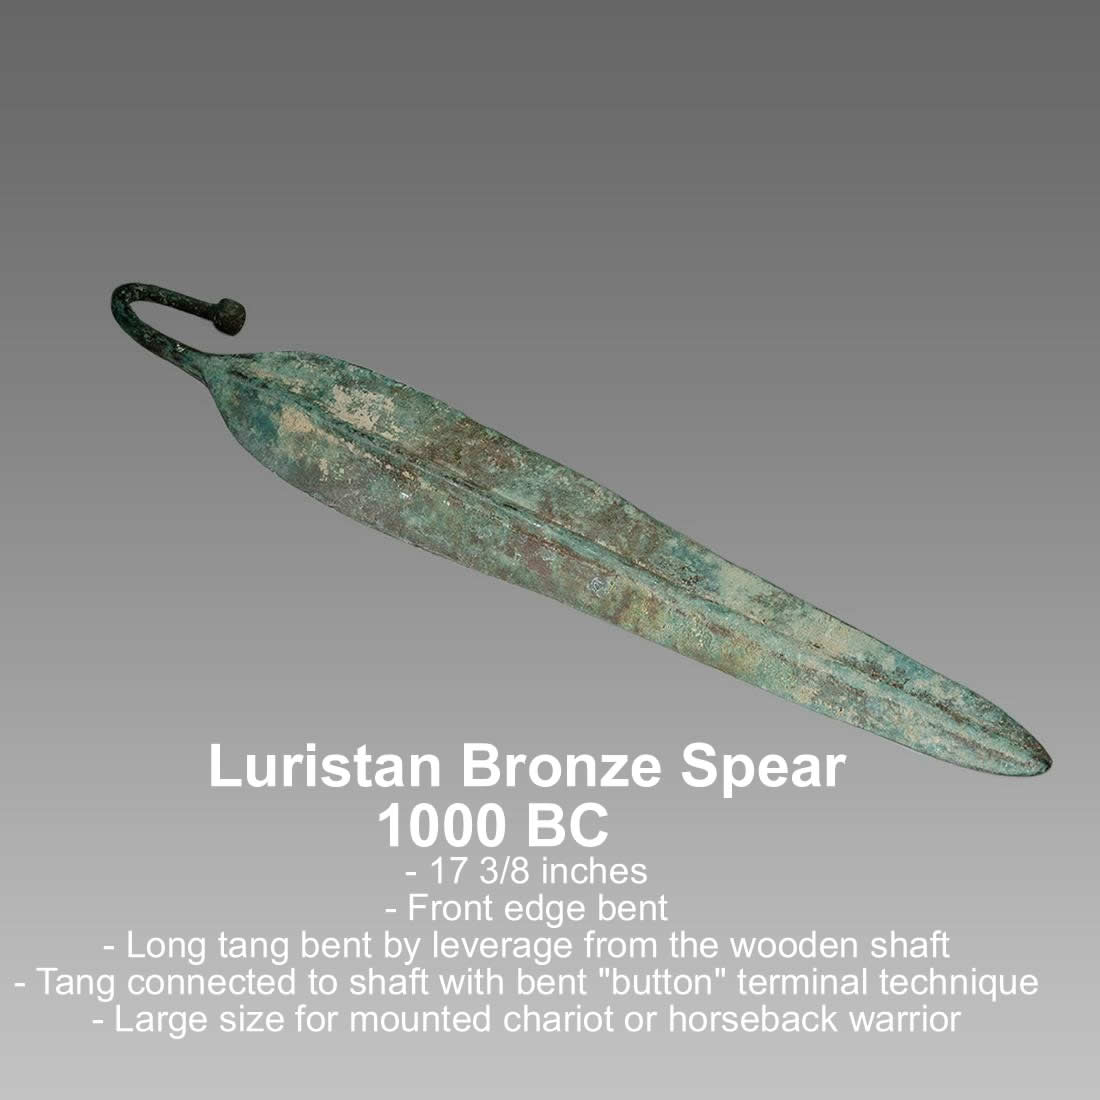 1000 700 BC Bronze Spearhead with description text